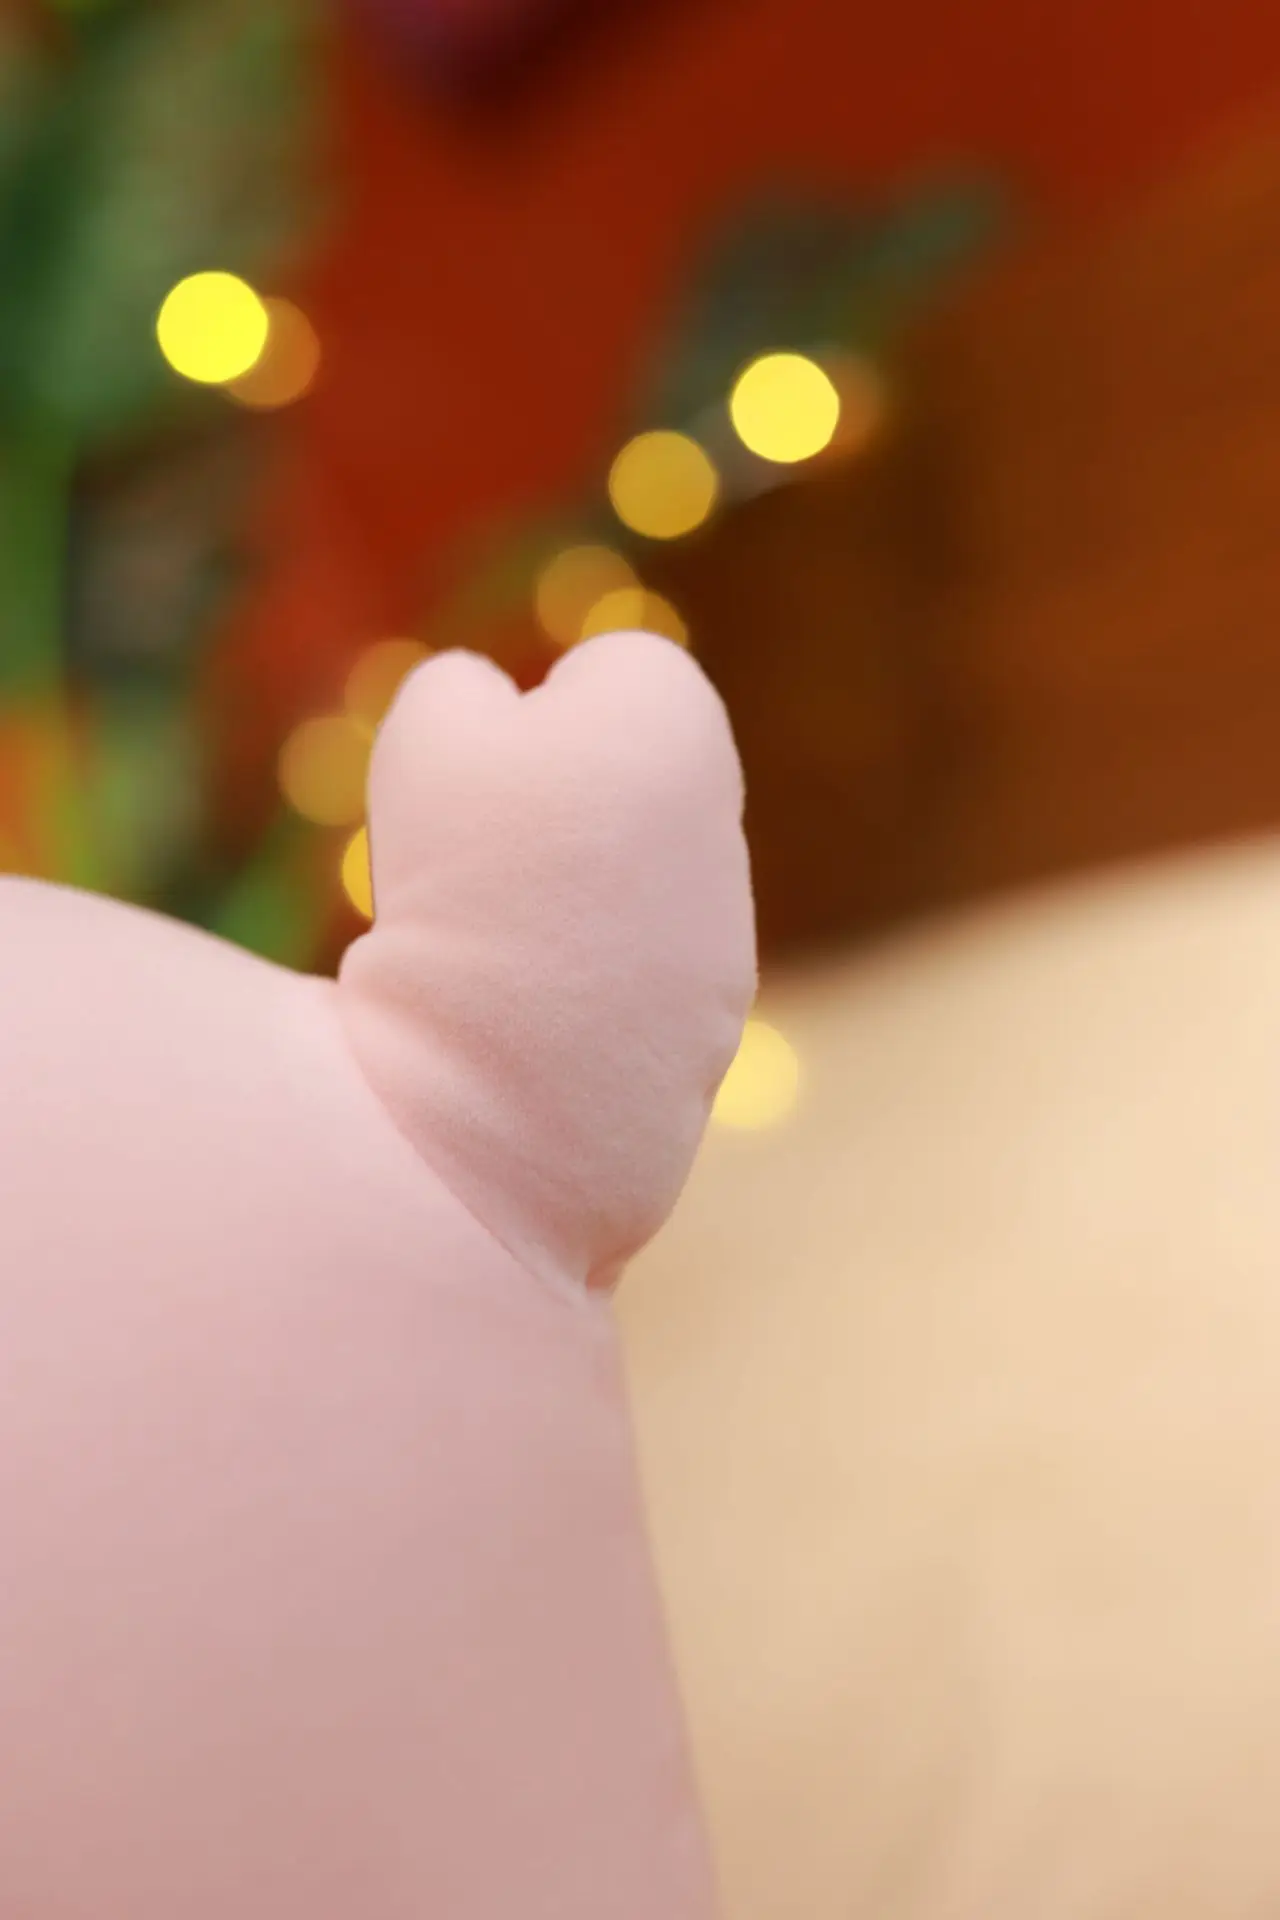 Sea Pig Plush | Big Eyes Ugly Sleeping Pig Plush Toy -12